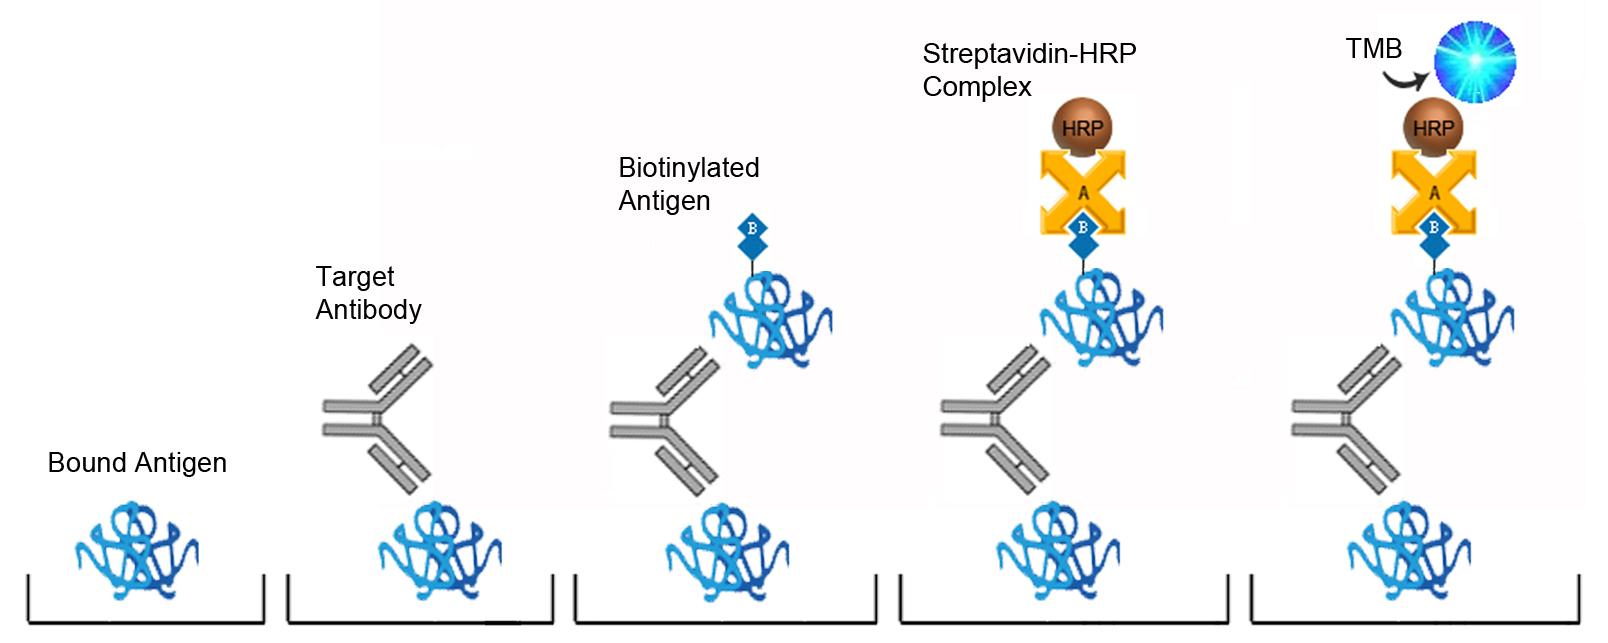 Anti-Type II Collagen Antibody ELISA Kit - Sandwich BoundAntigen SampleAb AntigenBiotin AvidHRP TMB